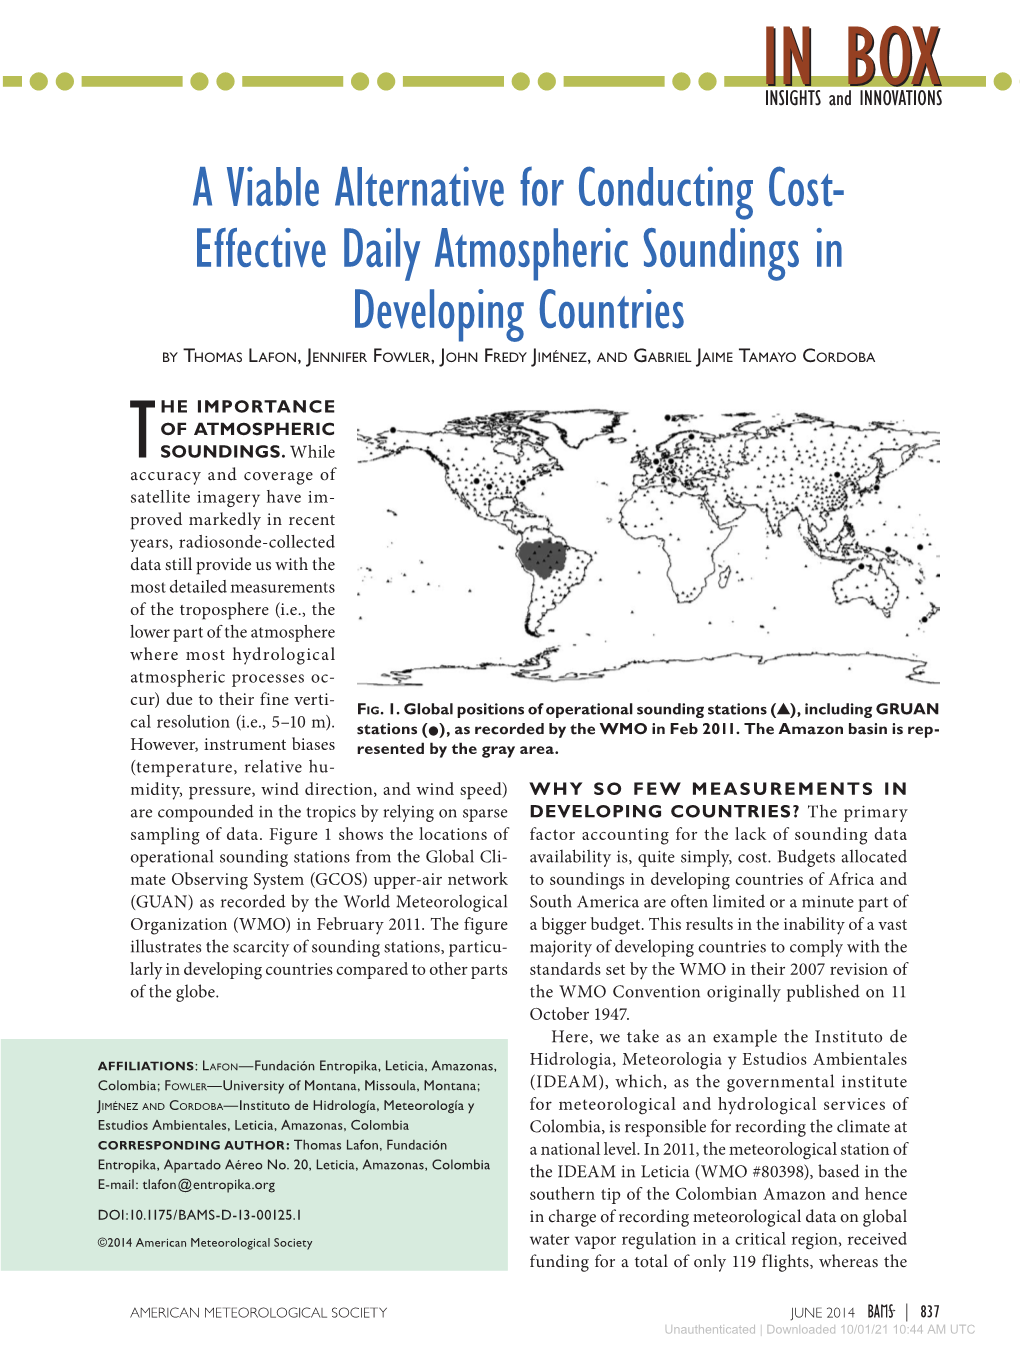 Effective Daily Atmospheric Soundings in Developing Countries by Thomas Lafon, Jennifer Fowler, John Fredy Jiménez, and Gabriel Jaime Tamayo Cordoba